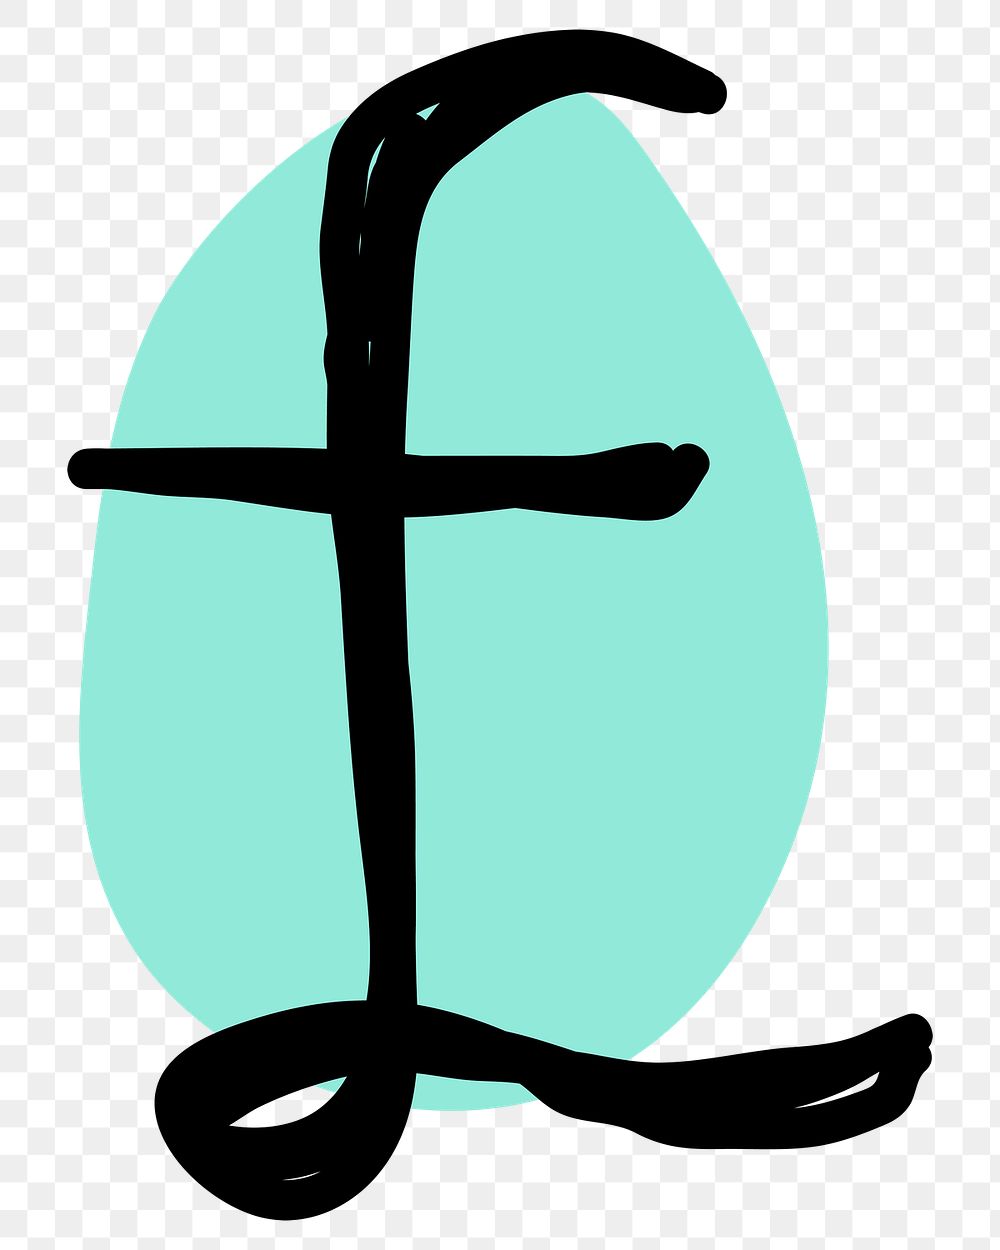 Pound symbol png black green with doodle design